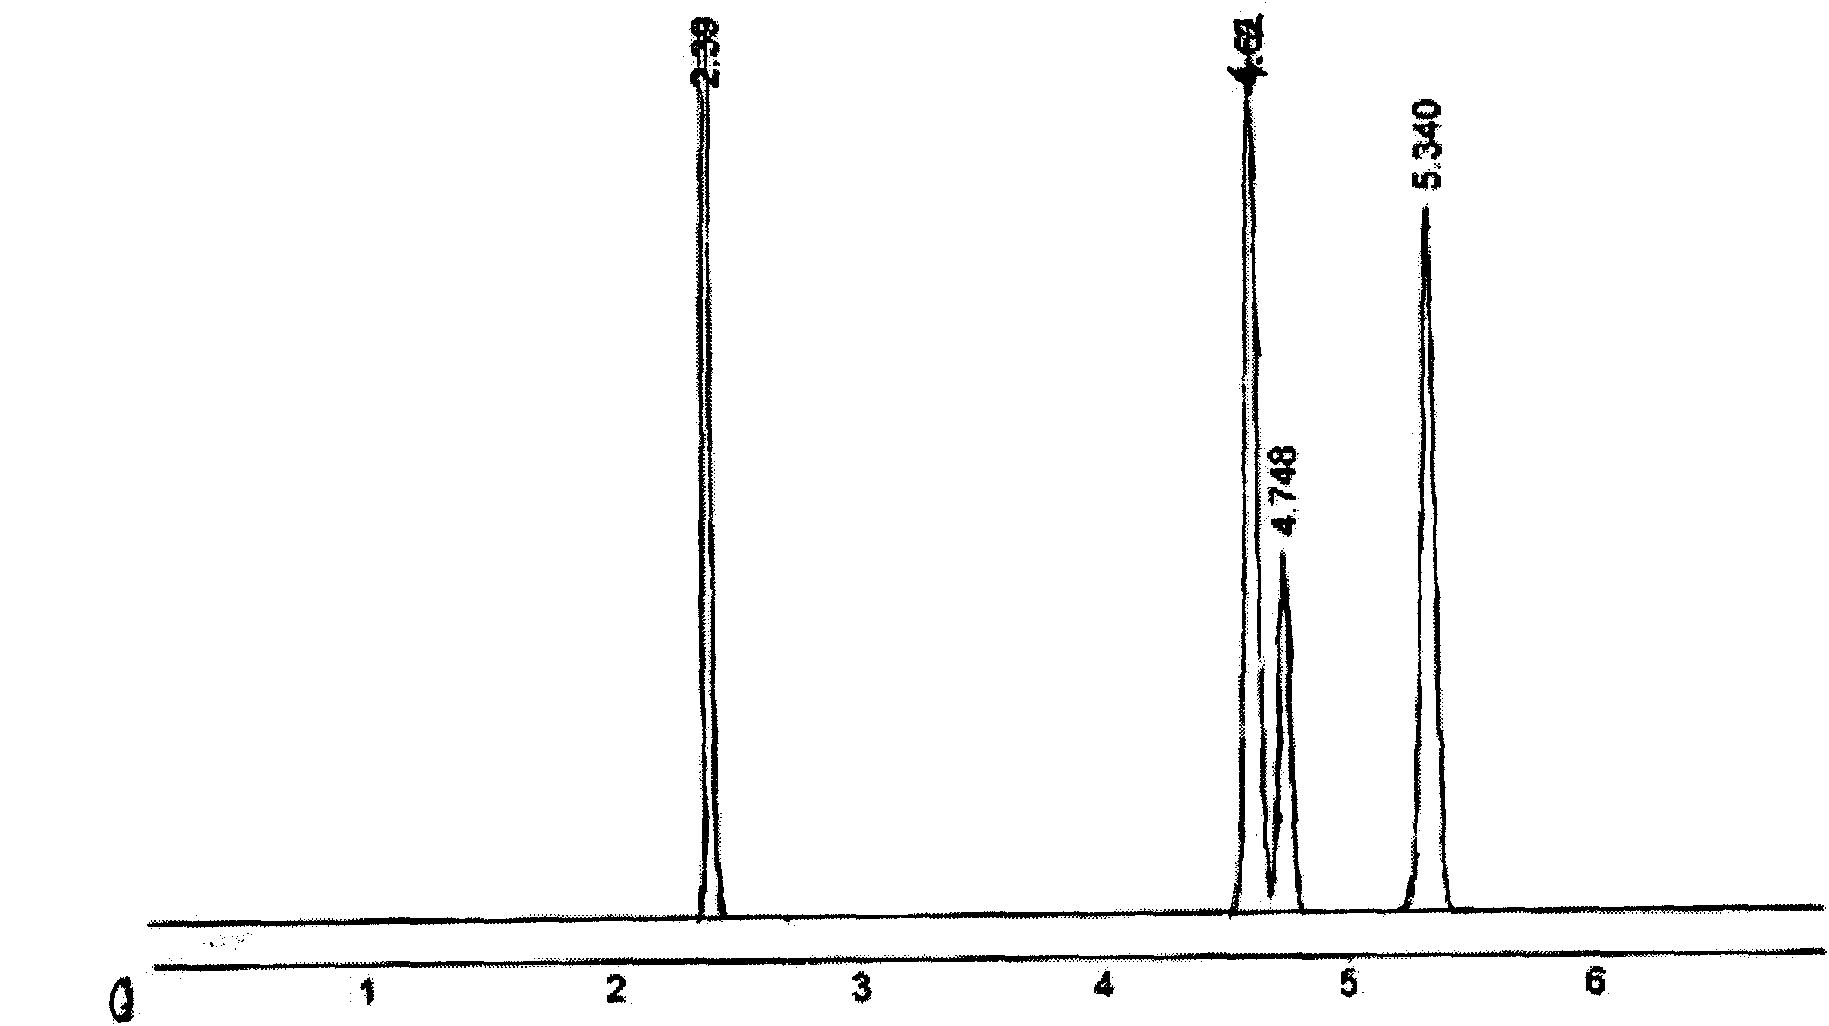 Capillary chromatography detection process of mixed benzene